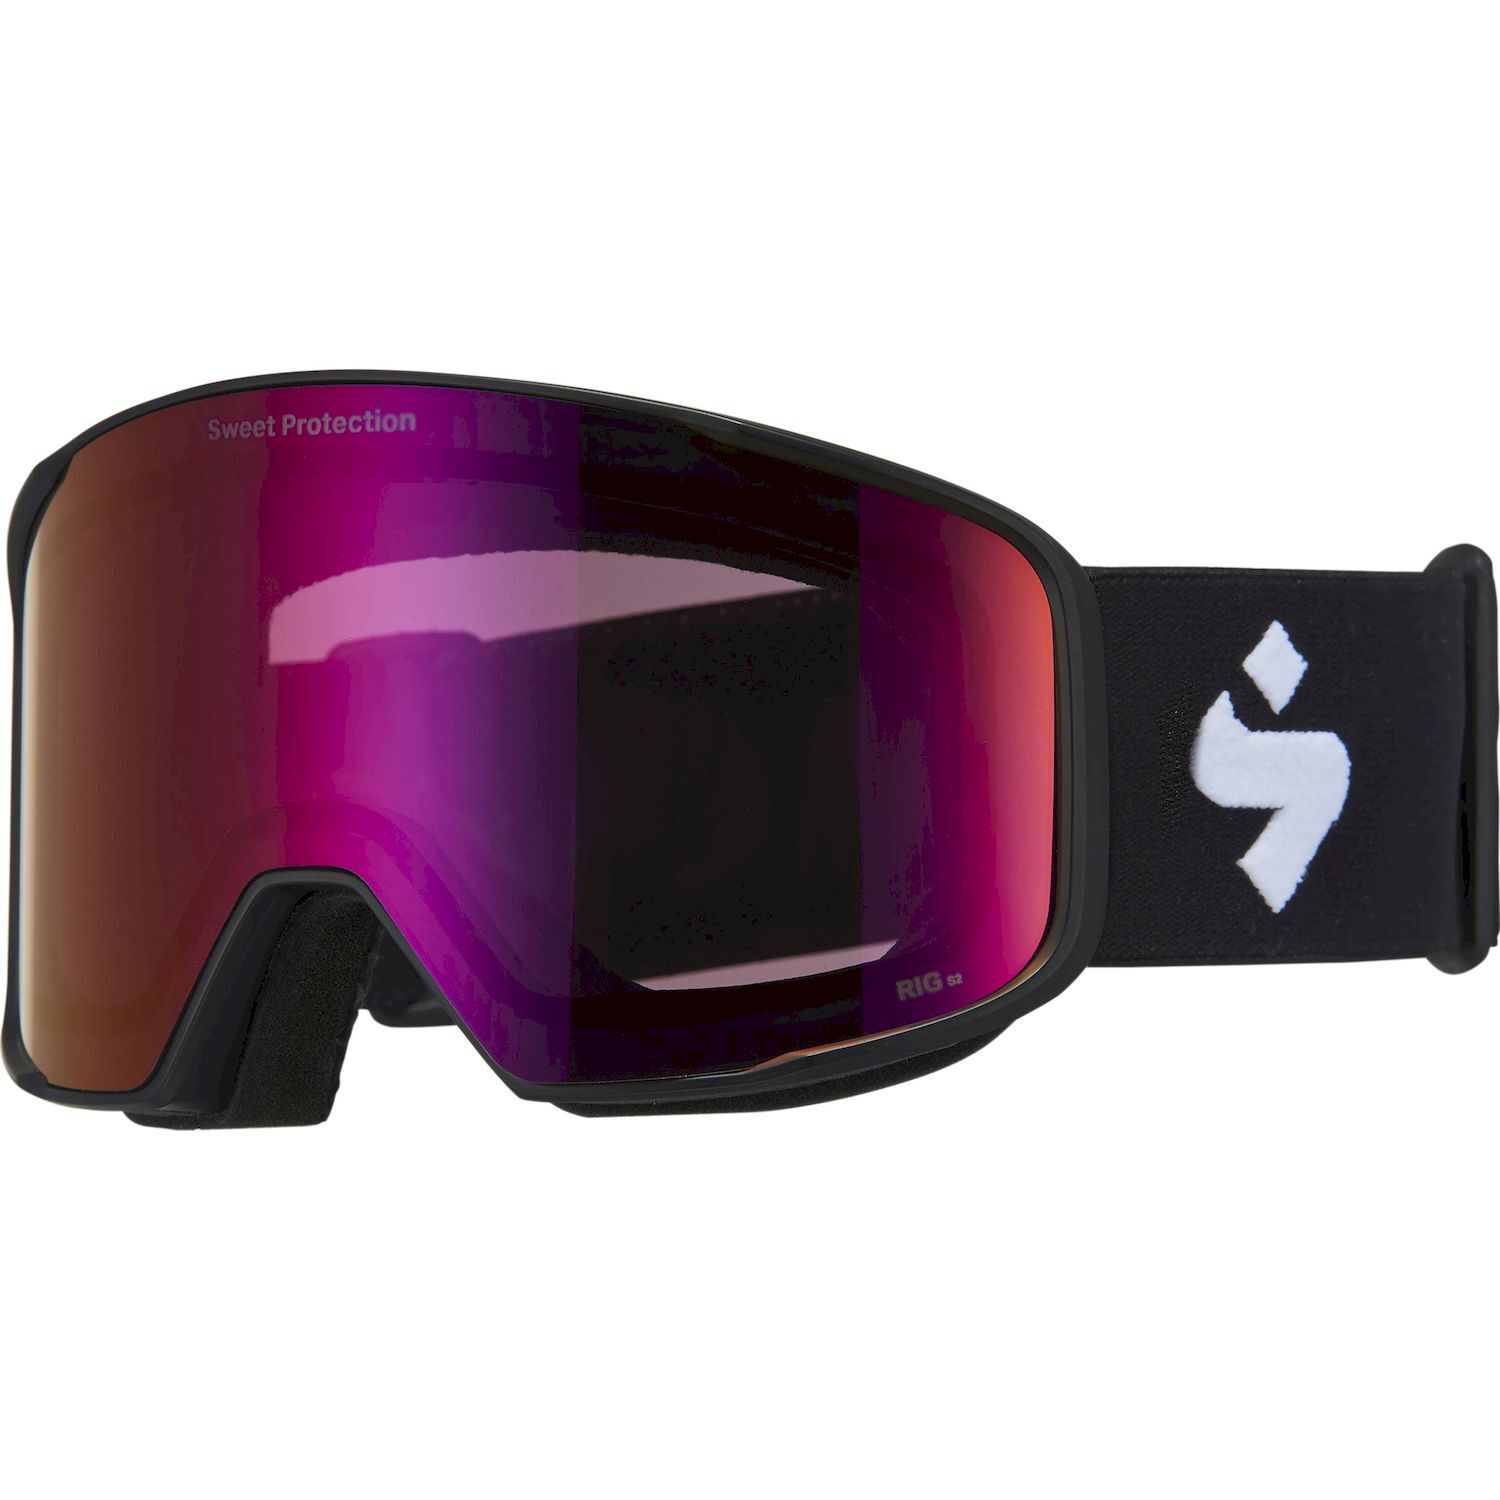 Sweet Protection Boondock RIG Reflect - Gafas de esquí - Hombre